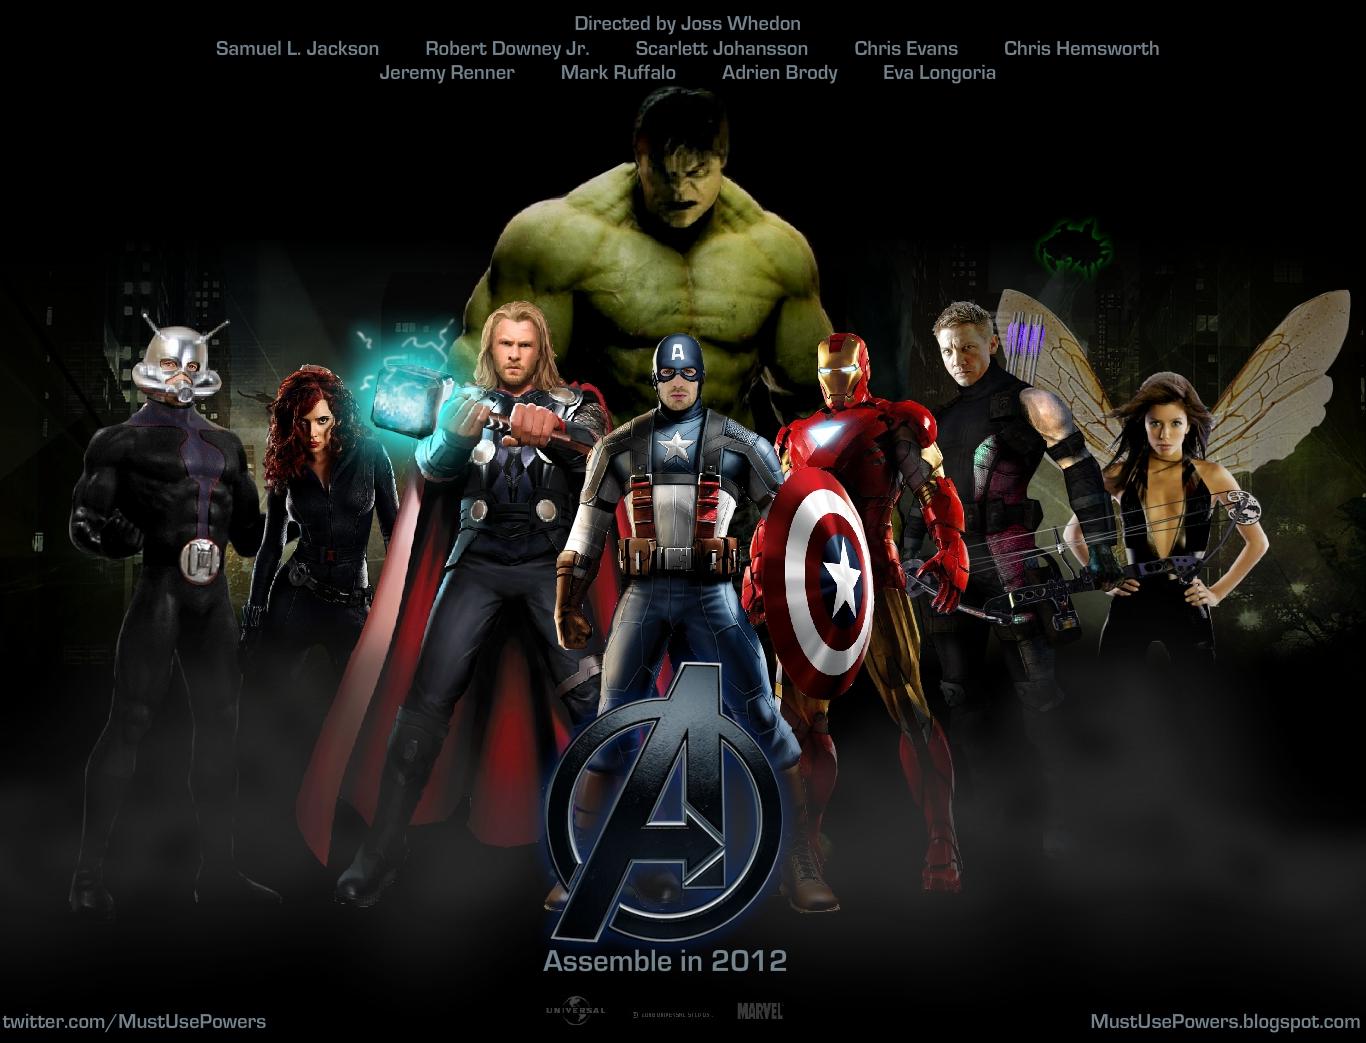 http://4.bp.blogspot.com/-rkZb0isdzWo/T6n02n0a90I/AAAAAAAABn0/2jVZ4vPij_Q/s1600/The+Avengers+2012+HQ%7Bfreehqwallpapers.blogspot.com%7D+%283%29.jpg